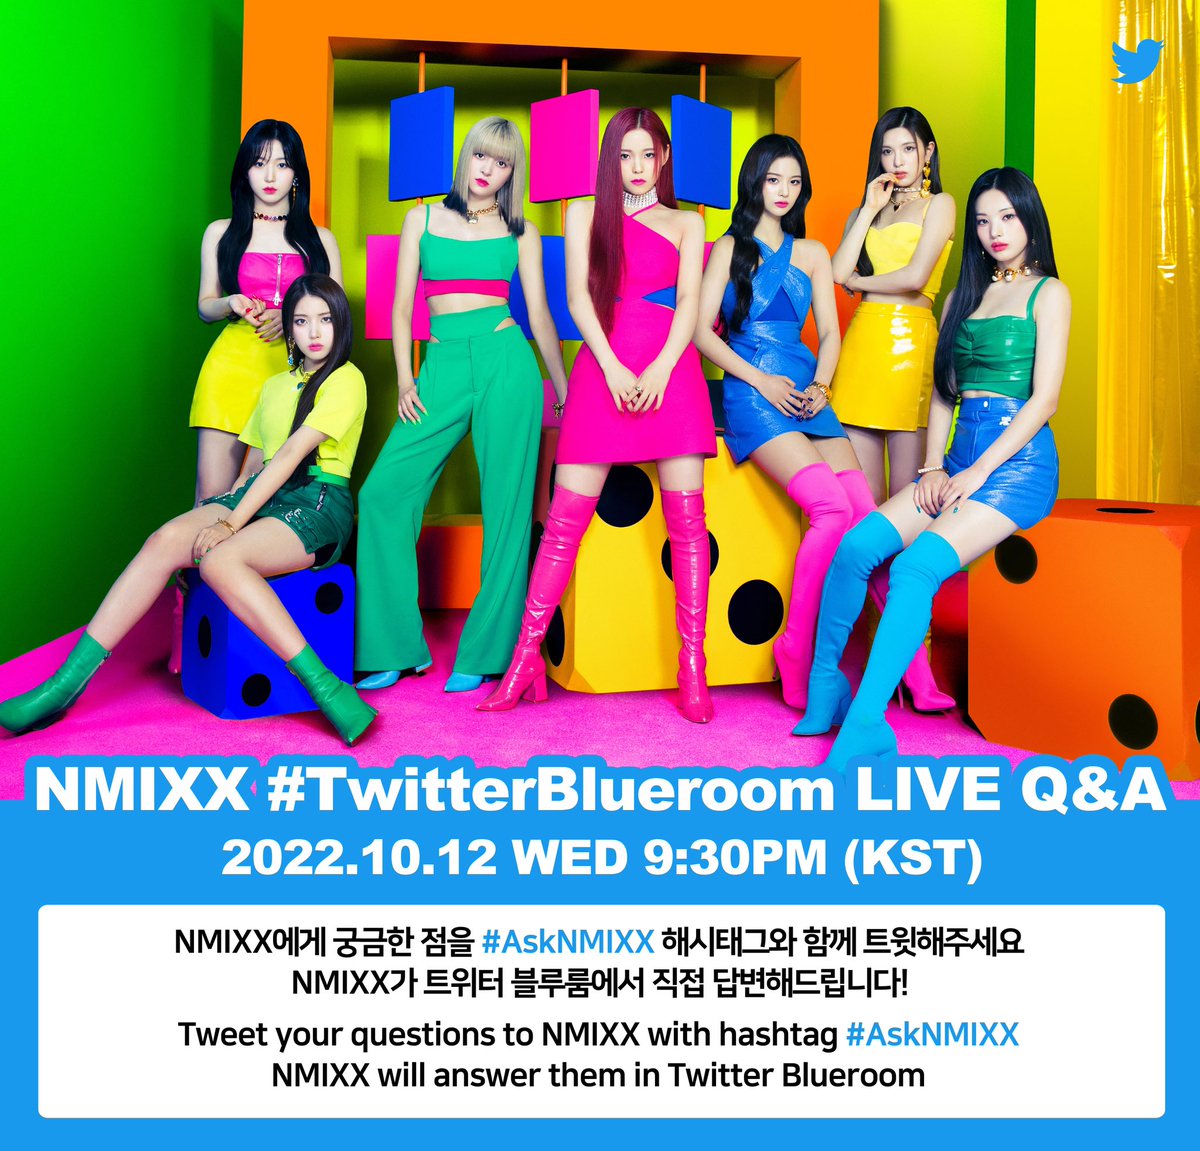 [📢] NMIXX #TwitterBlueroom LIVE Q&A 

🎲일시
2022.10.12 9:30PM (KST)

NMIXX에게 궁금한 점을
#AskNMIXX 해시태그와 함께
트윗해주세요!

🎲참여기간
221007(금) - 221008(토)

#NMIXX #엔믹스
#ENTWURF
#DICE
#AskNMIXX